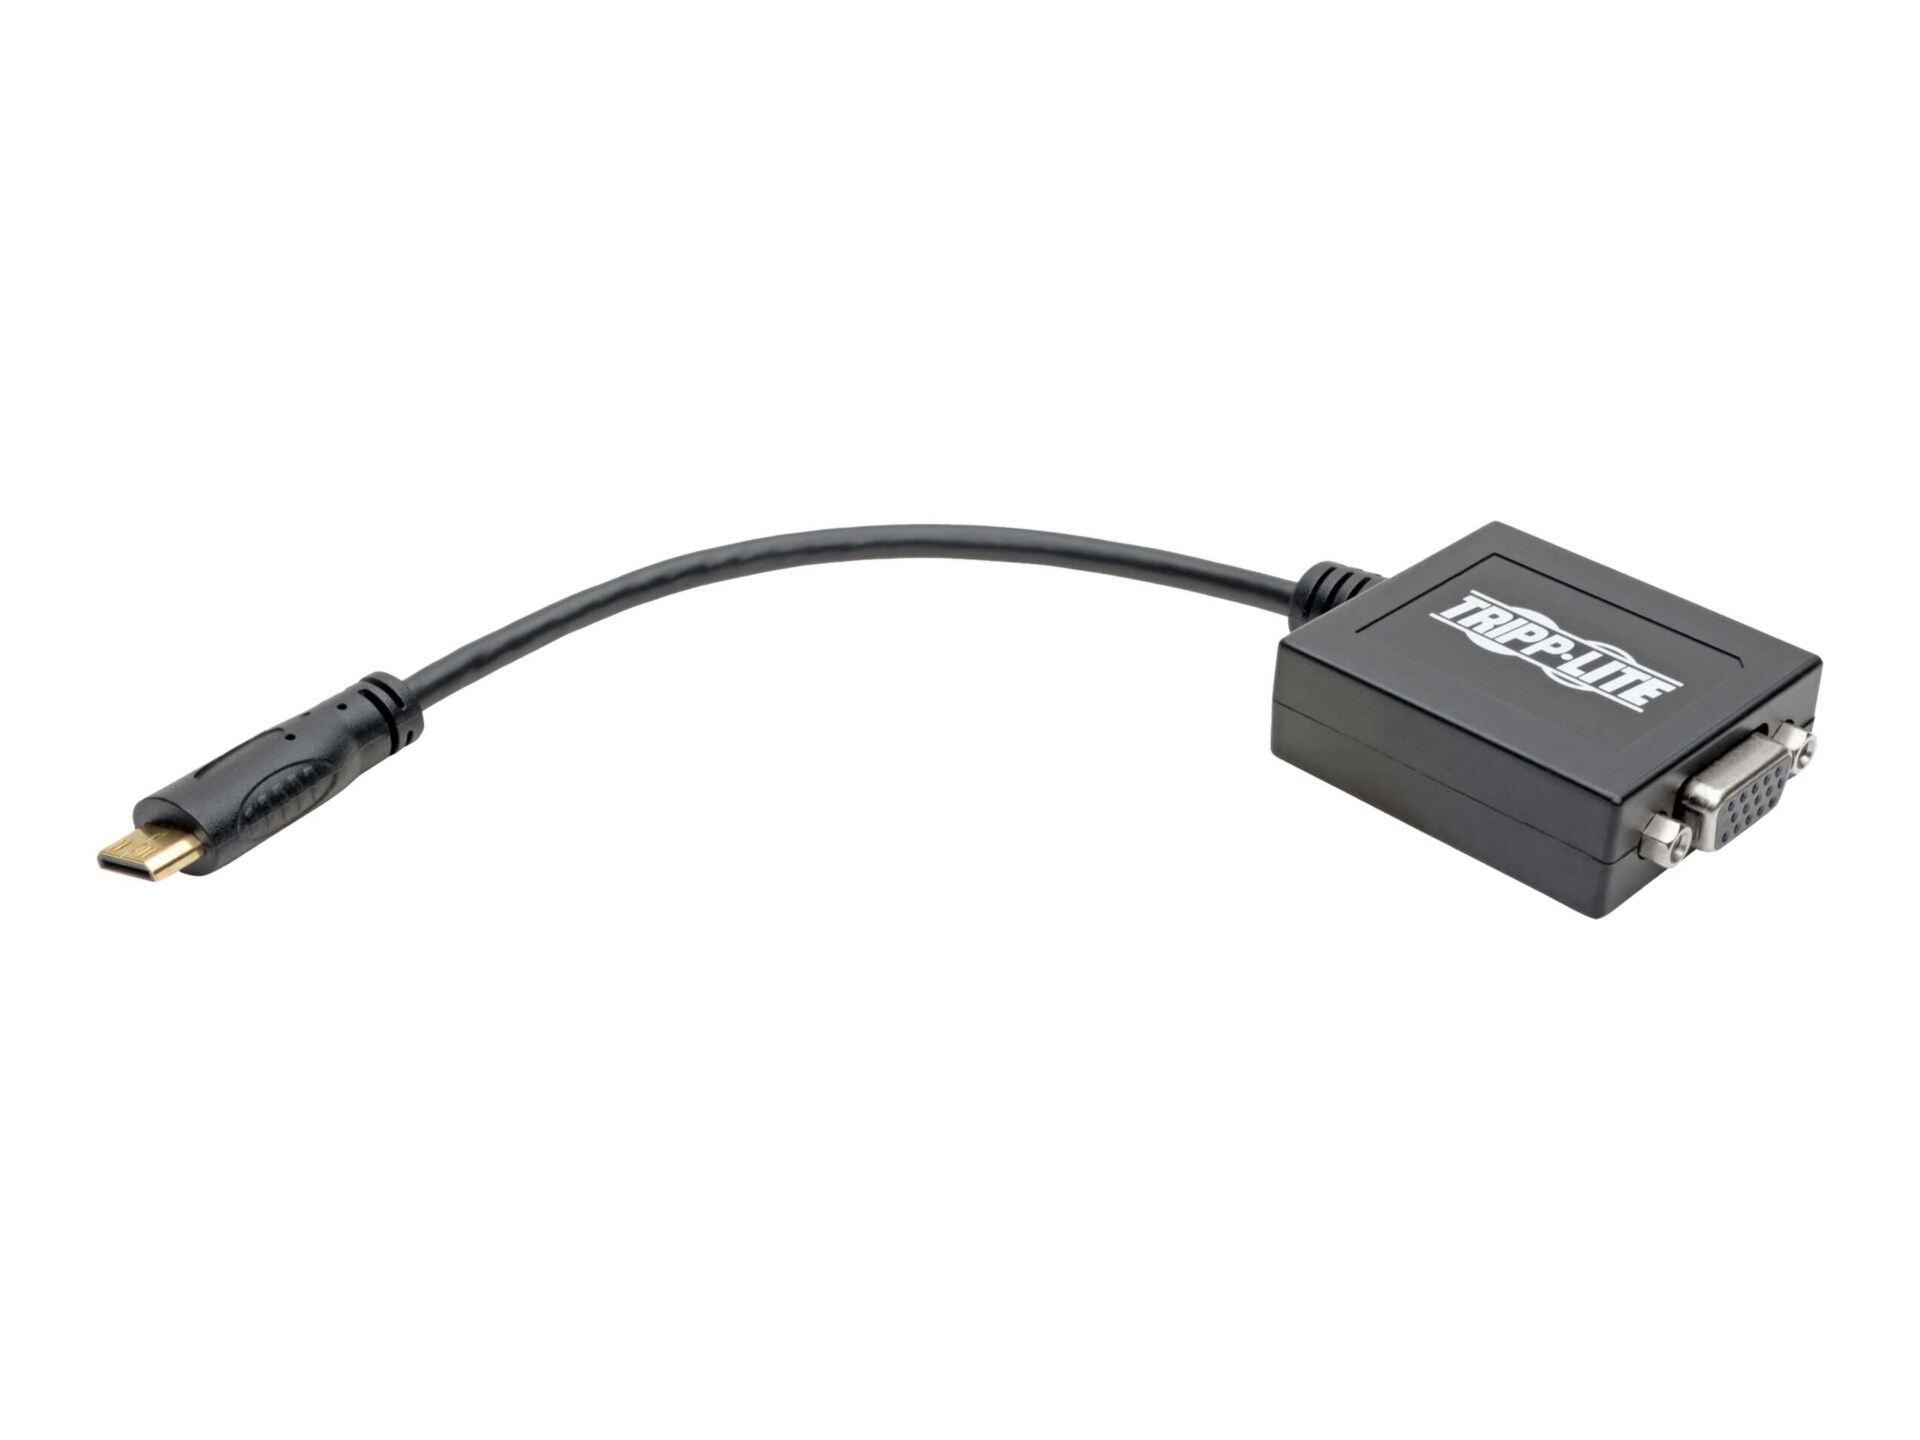 Tripp Lite Mini HDMI to VGA Adapter Converter fo Smartphone / Tablet / Ultr